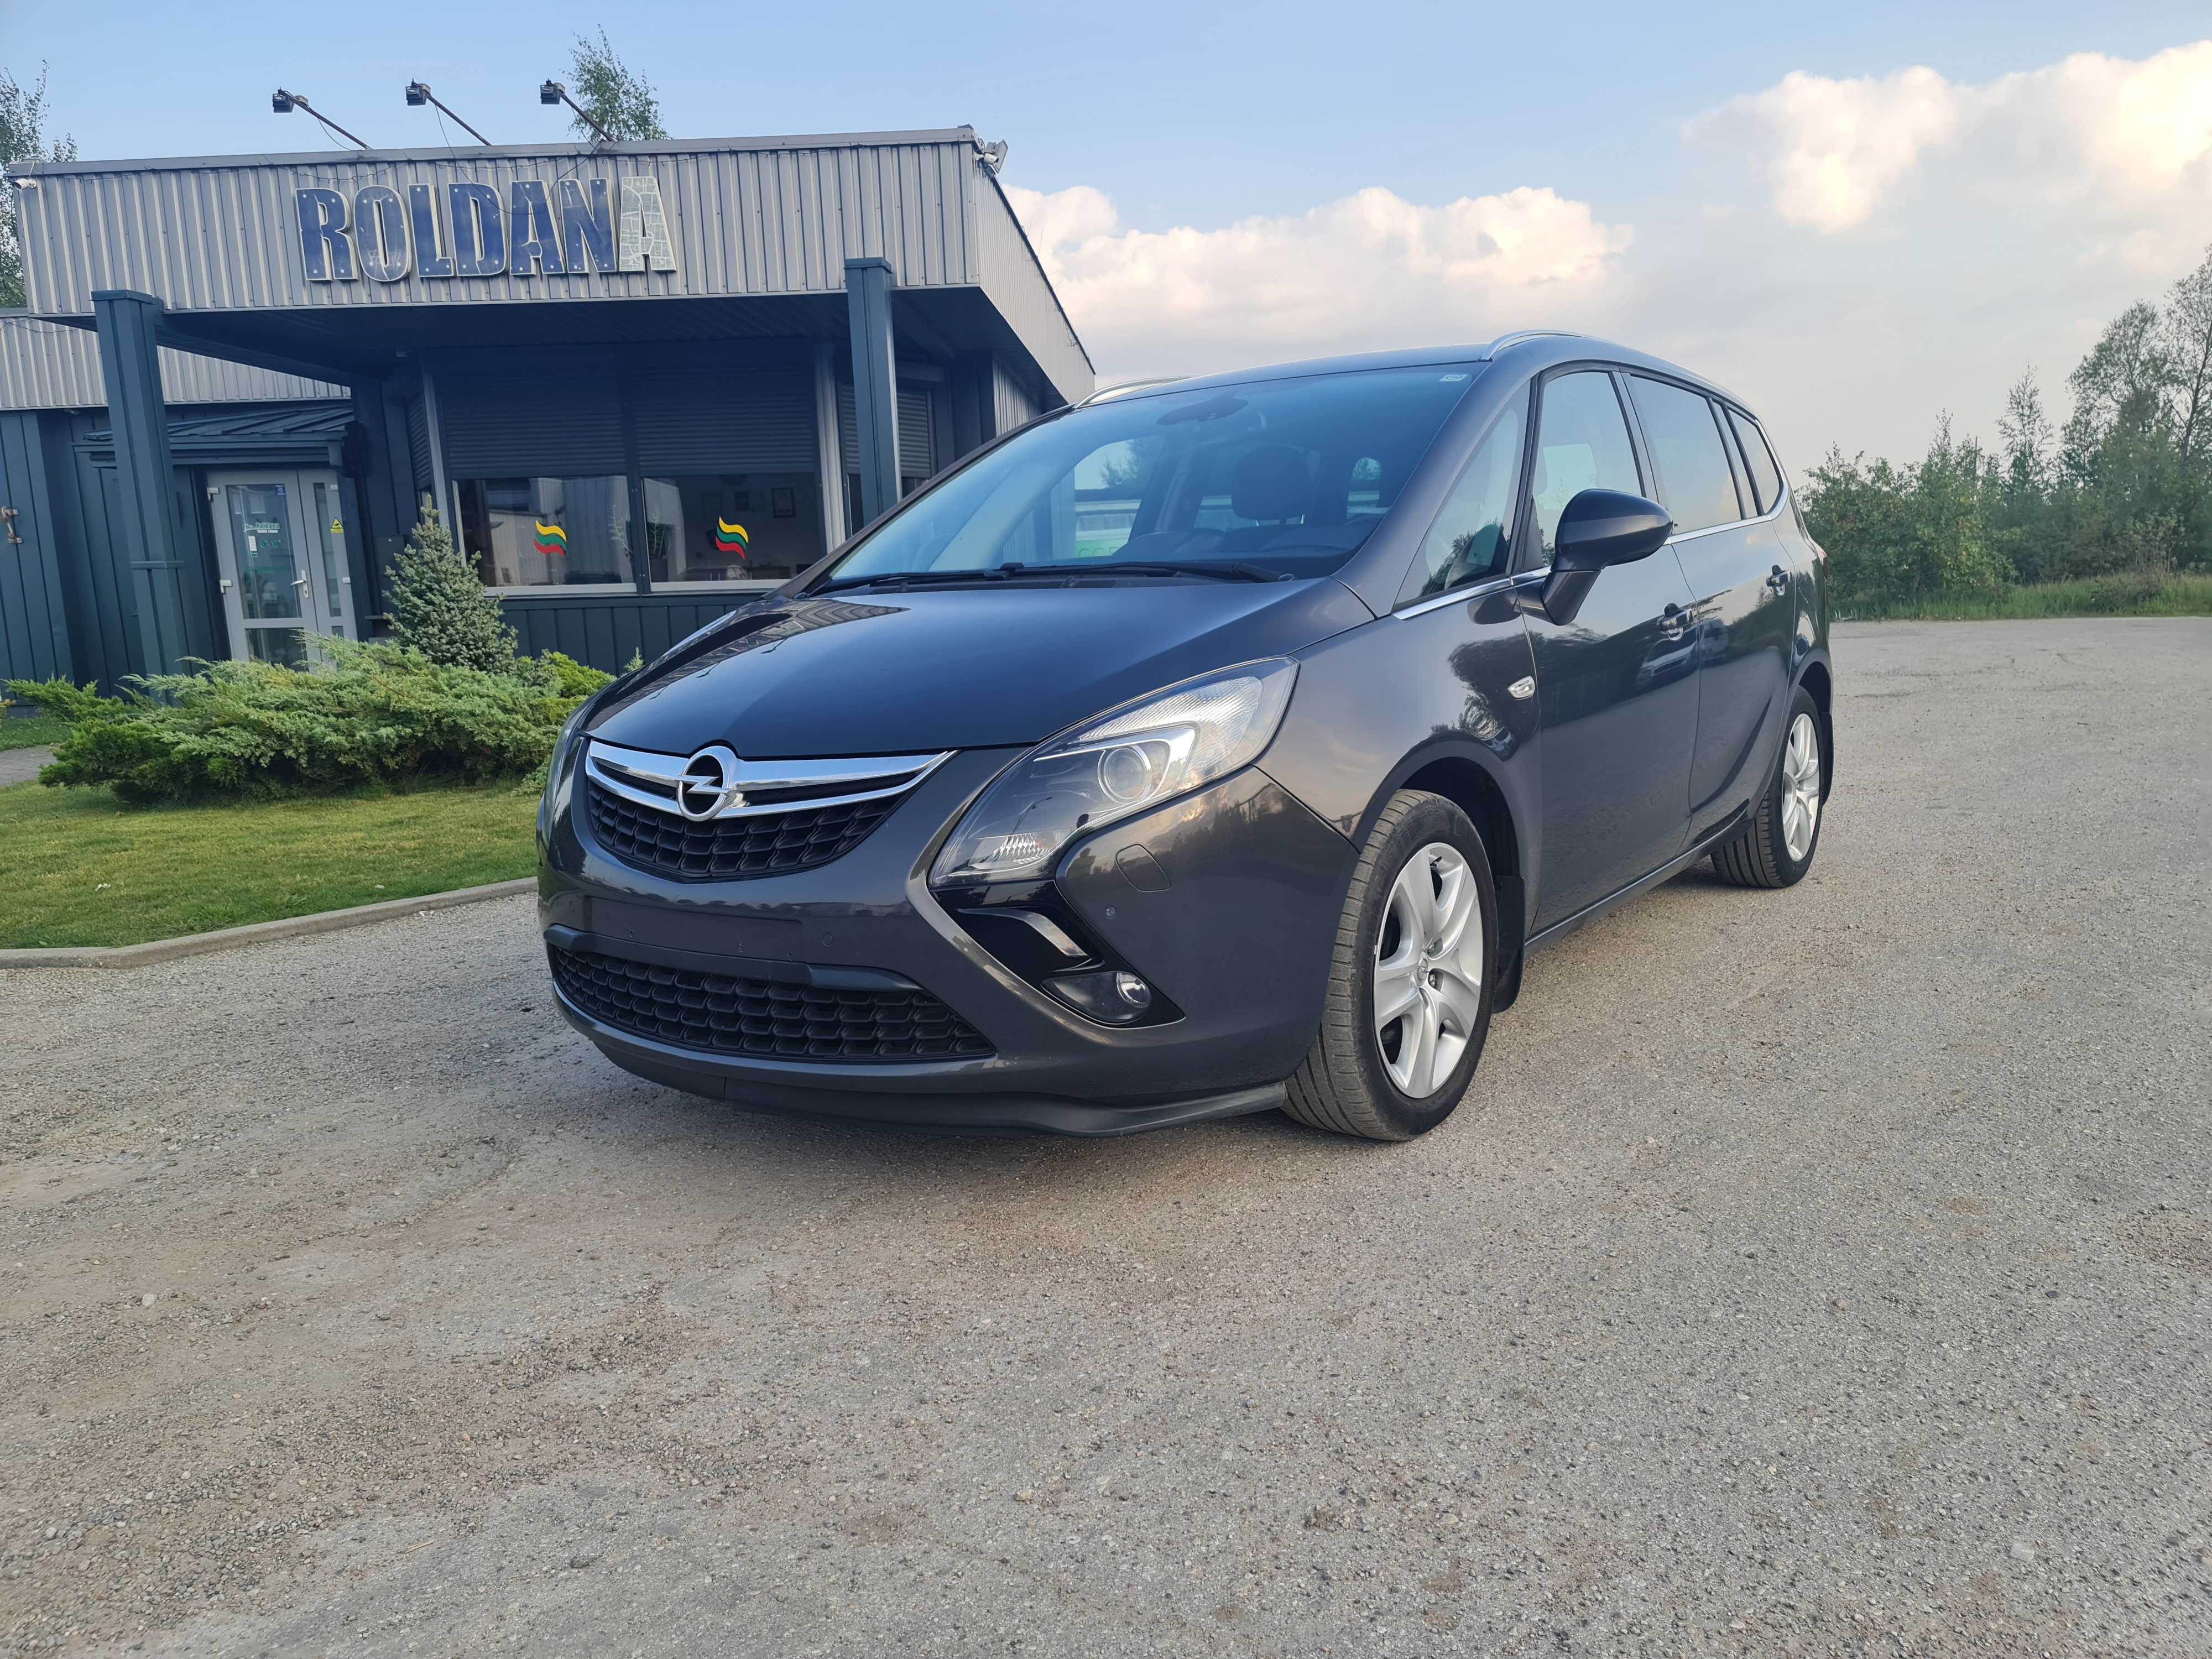 Opel Zafira, 1.6 l., vienatūris, 2016/naudoti automobiliai/Roldana